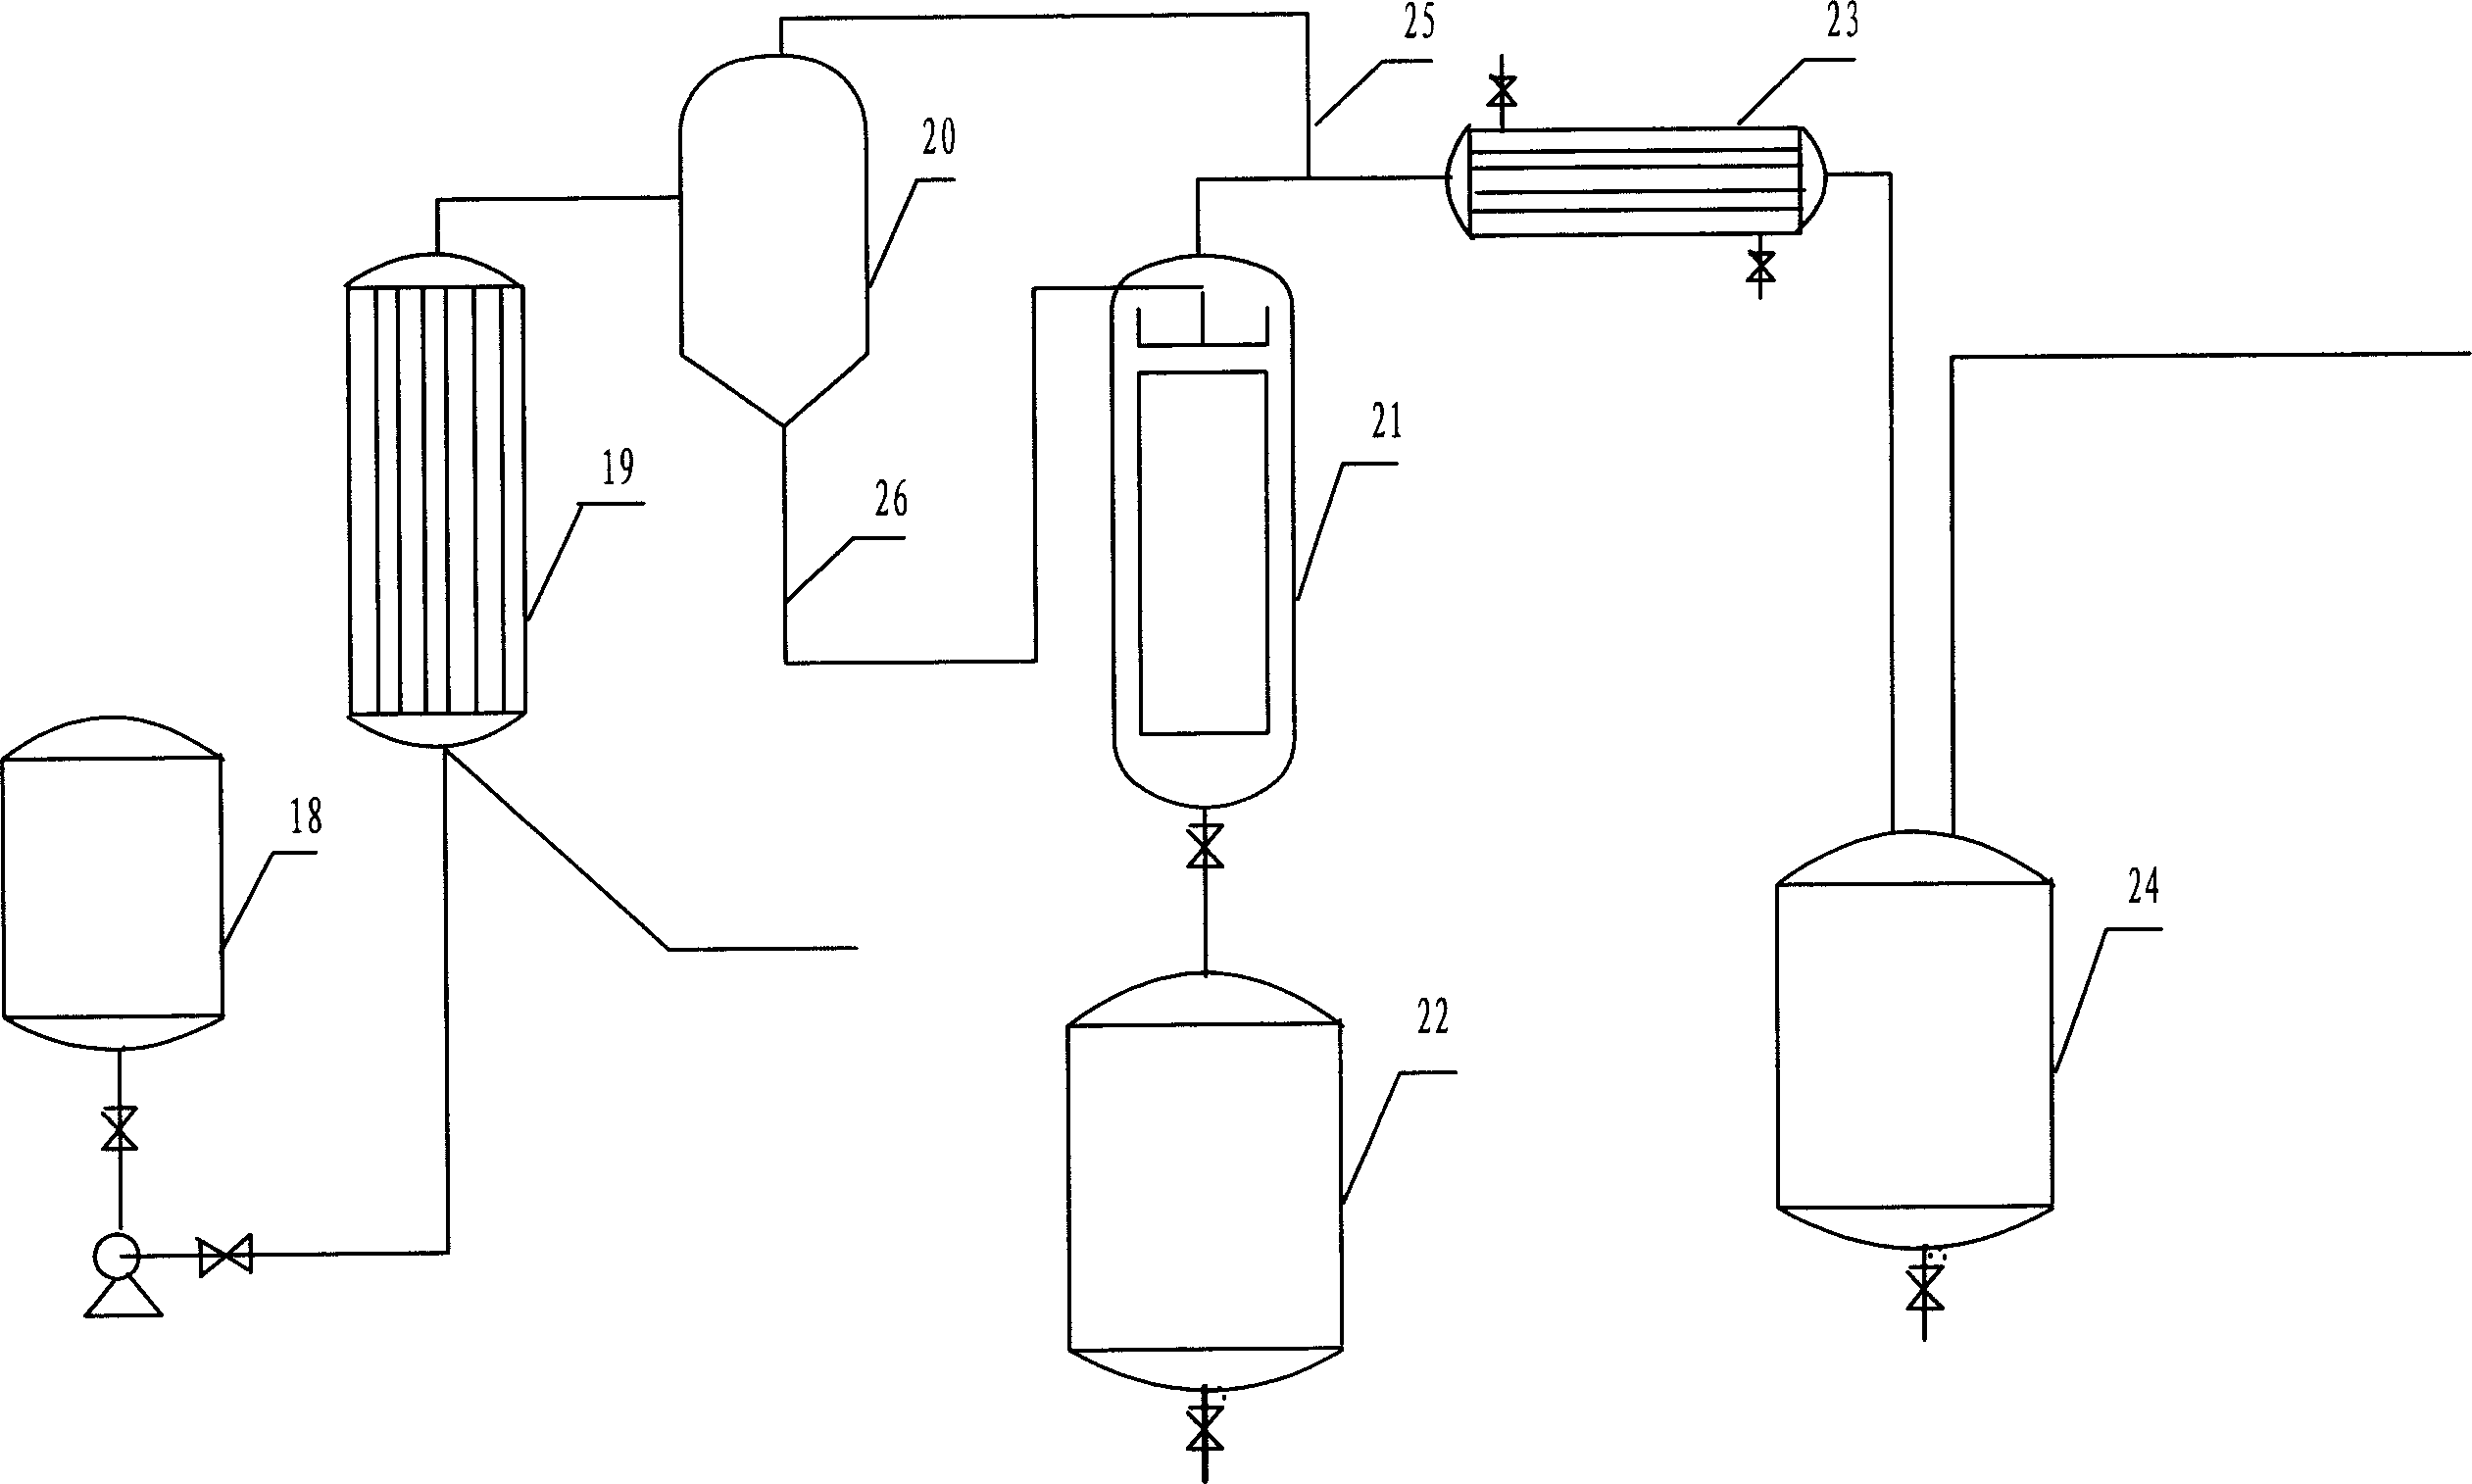 Production process of azoic disperse dye